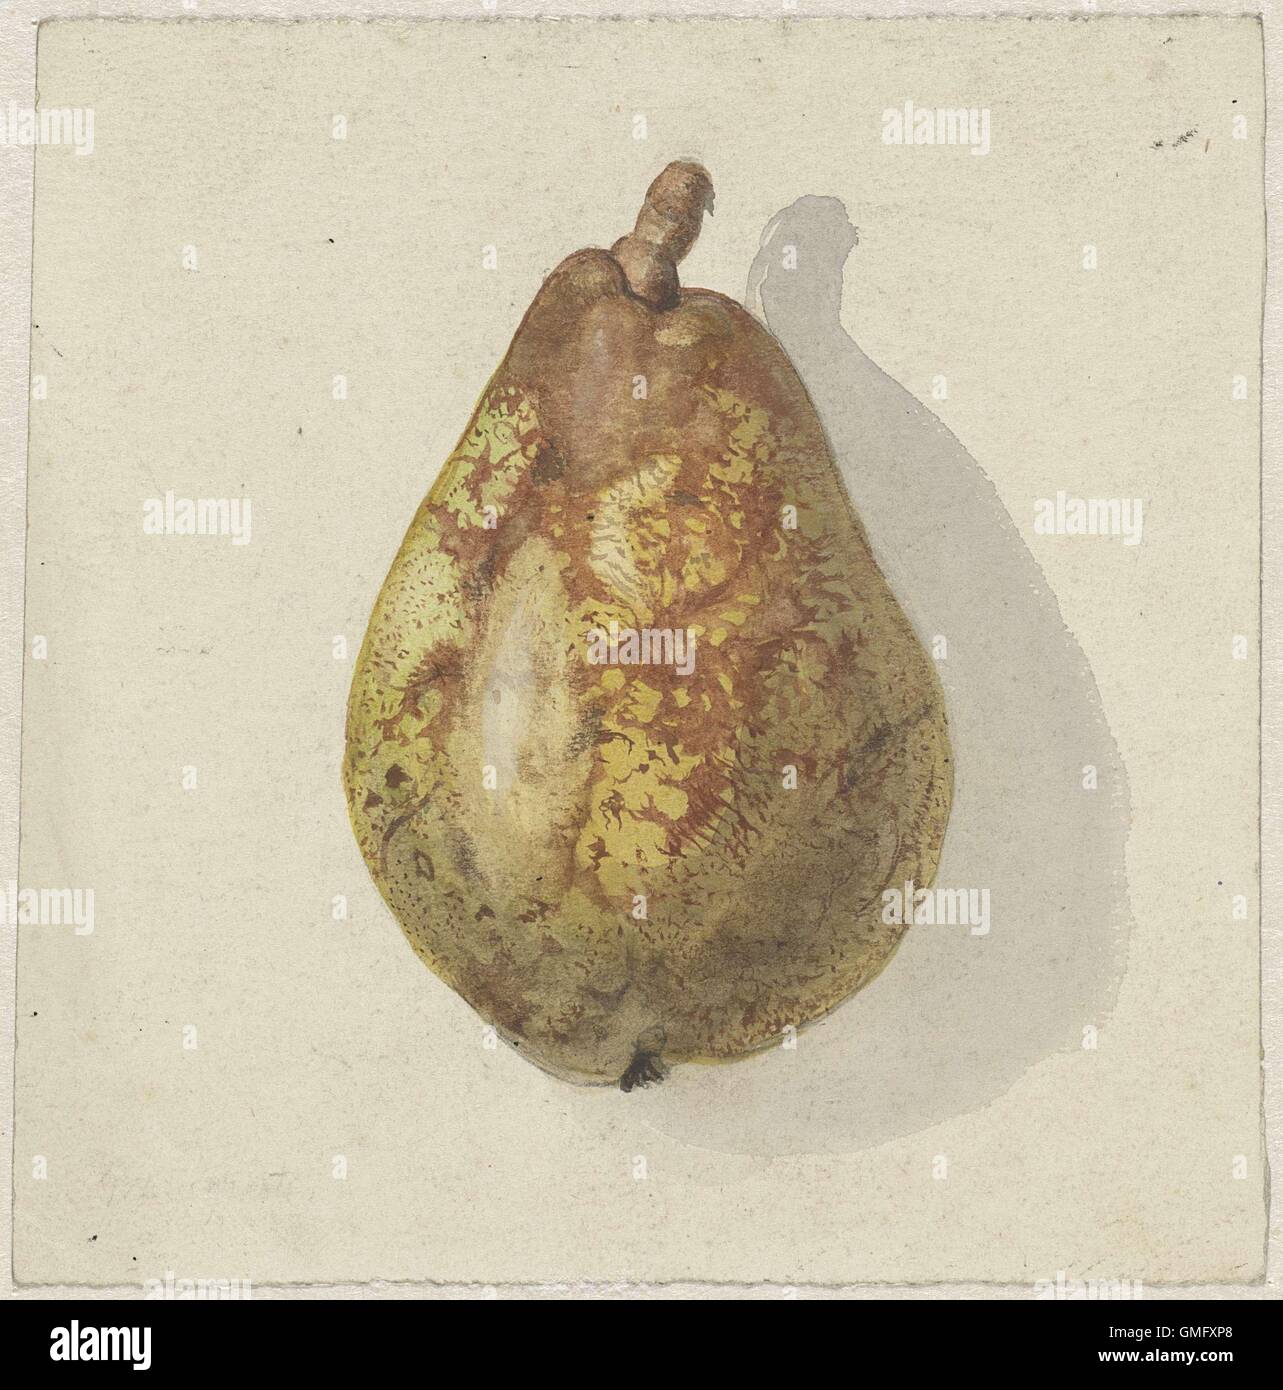 Pear, by Gerardina Jacoba van de Sande Bakhuyzen, c.1850-80, Dutch watercolor painting (BSLOC 2016 2 279) Stock Photo